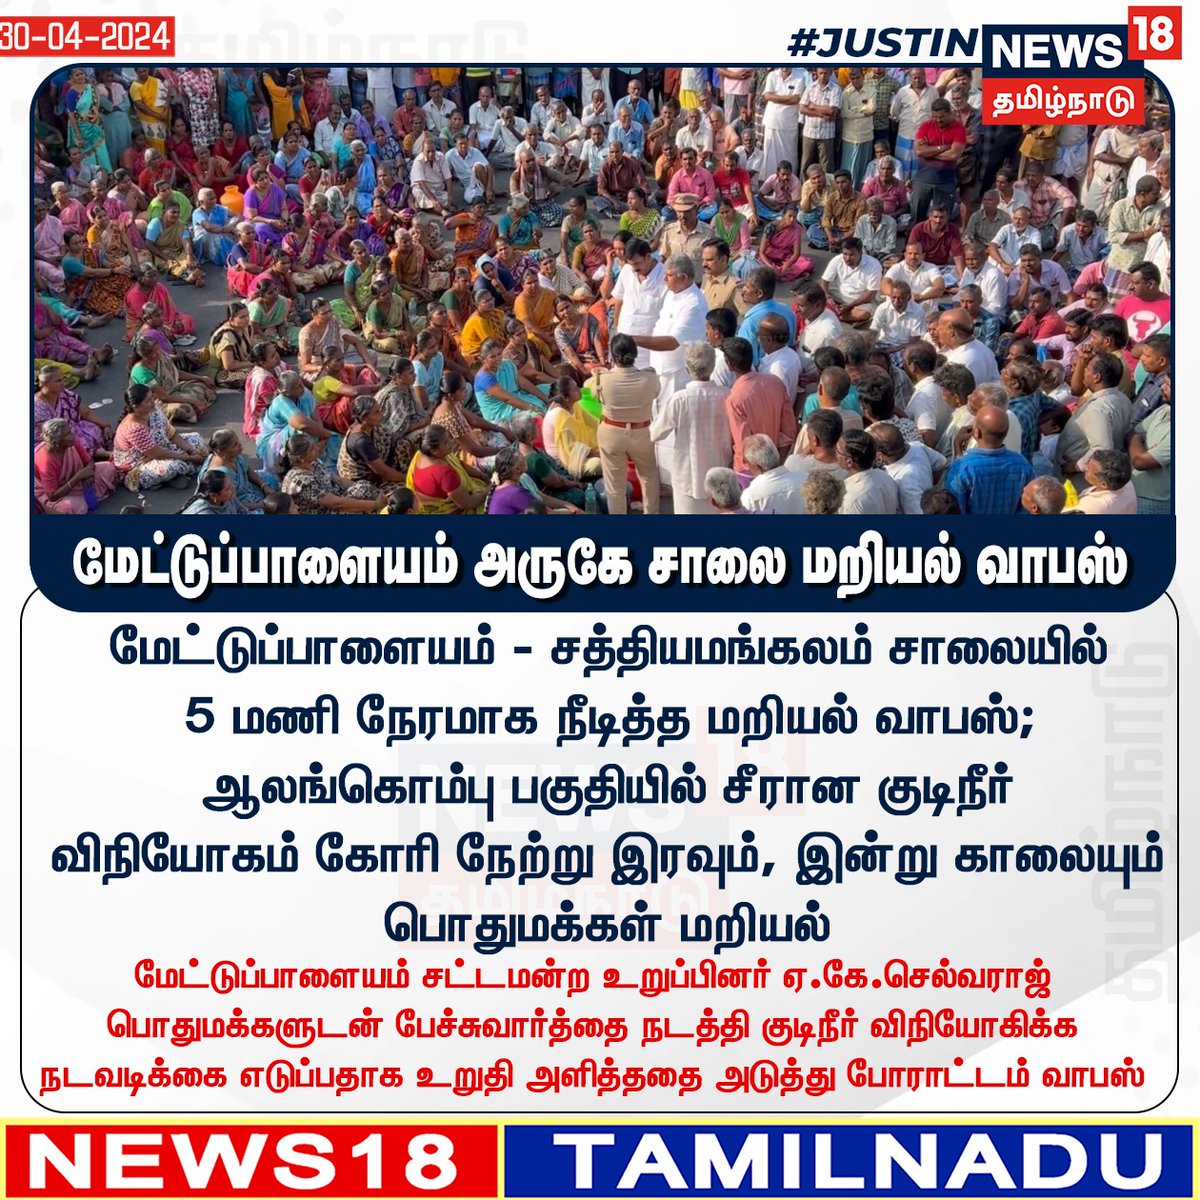 #JUSTIN மேட்டுப்பாளையம் அருகே சாலை மறியல் வாபஸ்
#Mettupalayam #Sathyamangalam #Water #Protest #Selvaraj #News18TamilNadu | News18Tamil.com